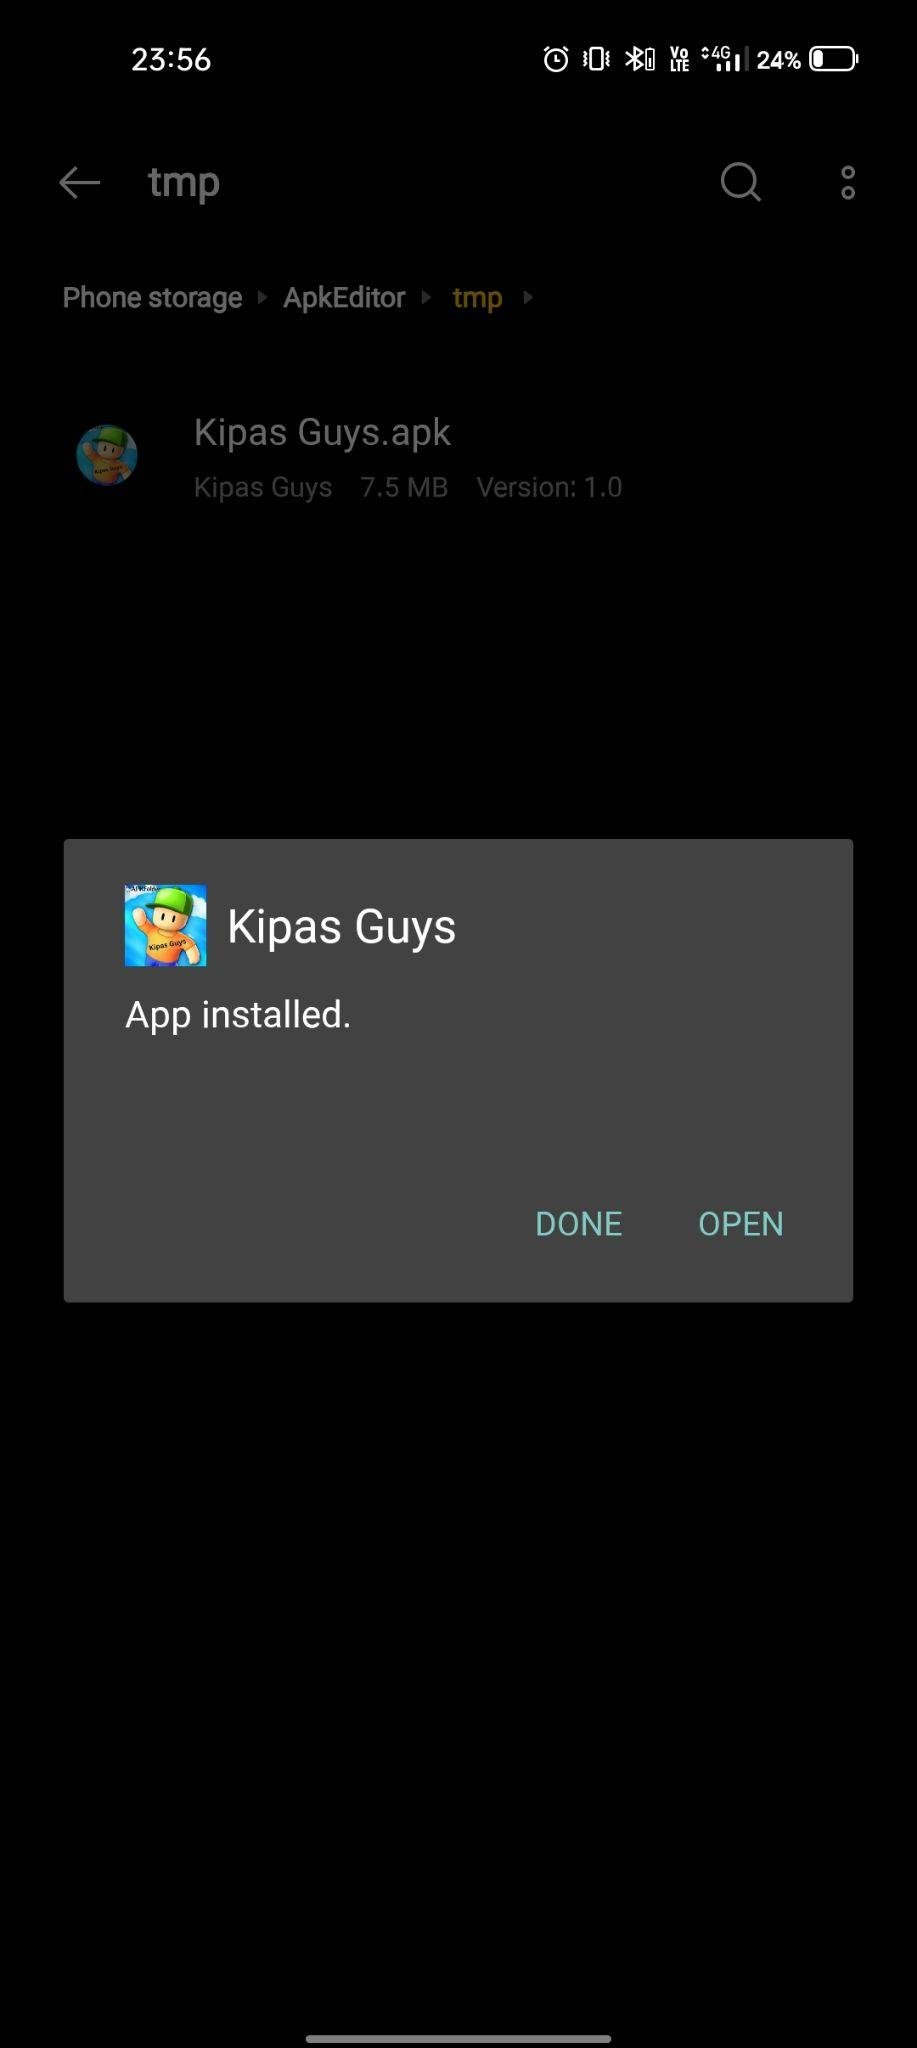 Kipas Guys apk installed